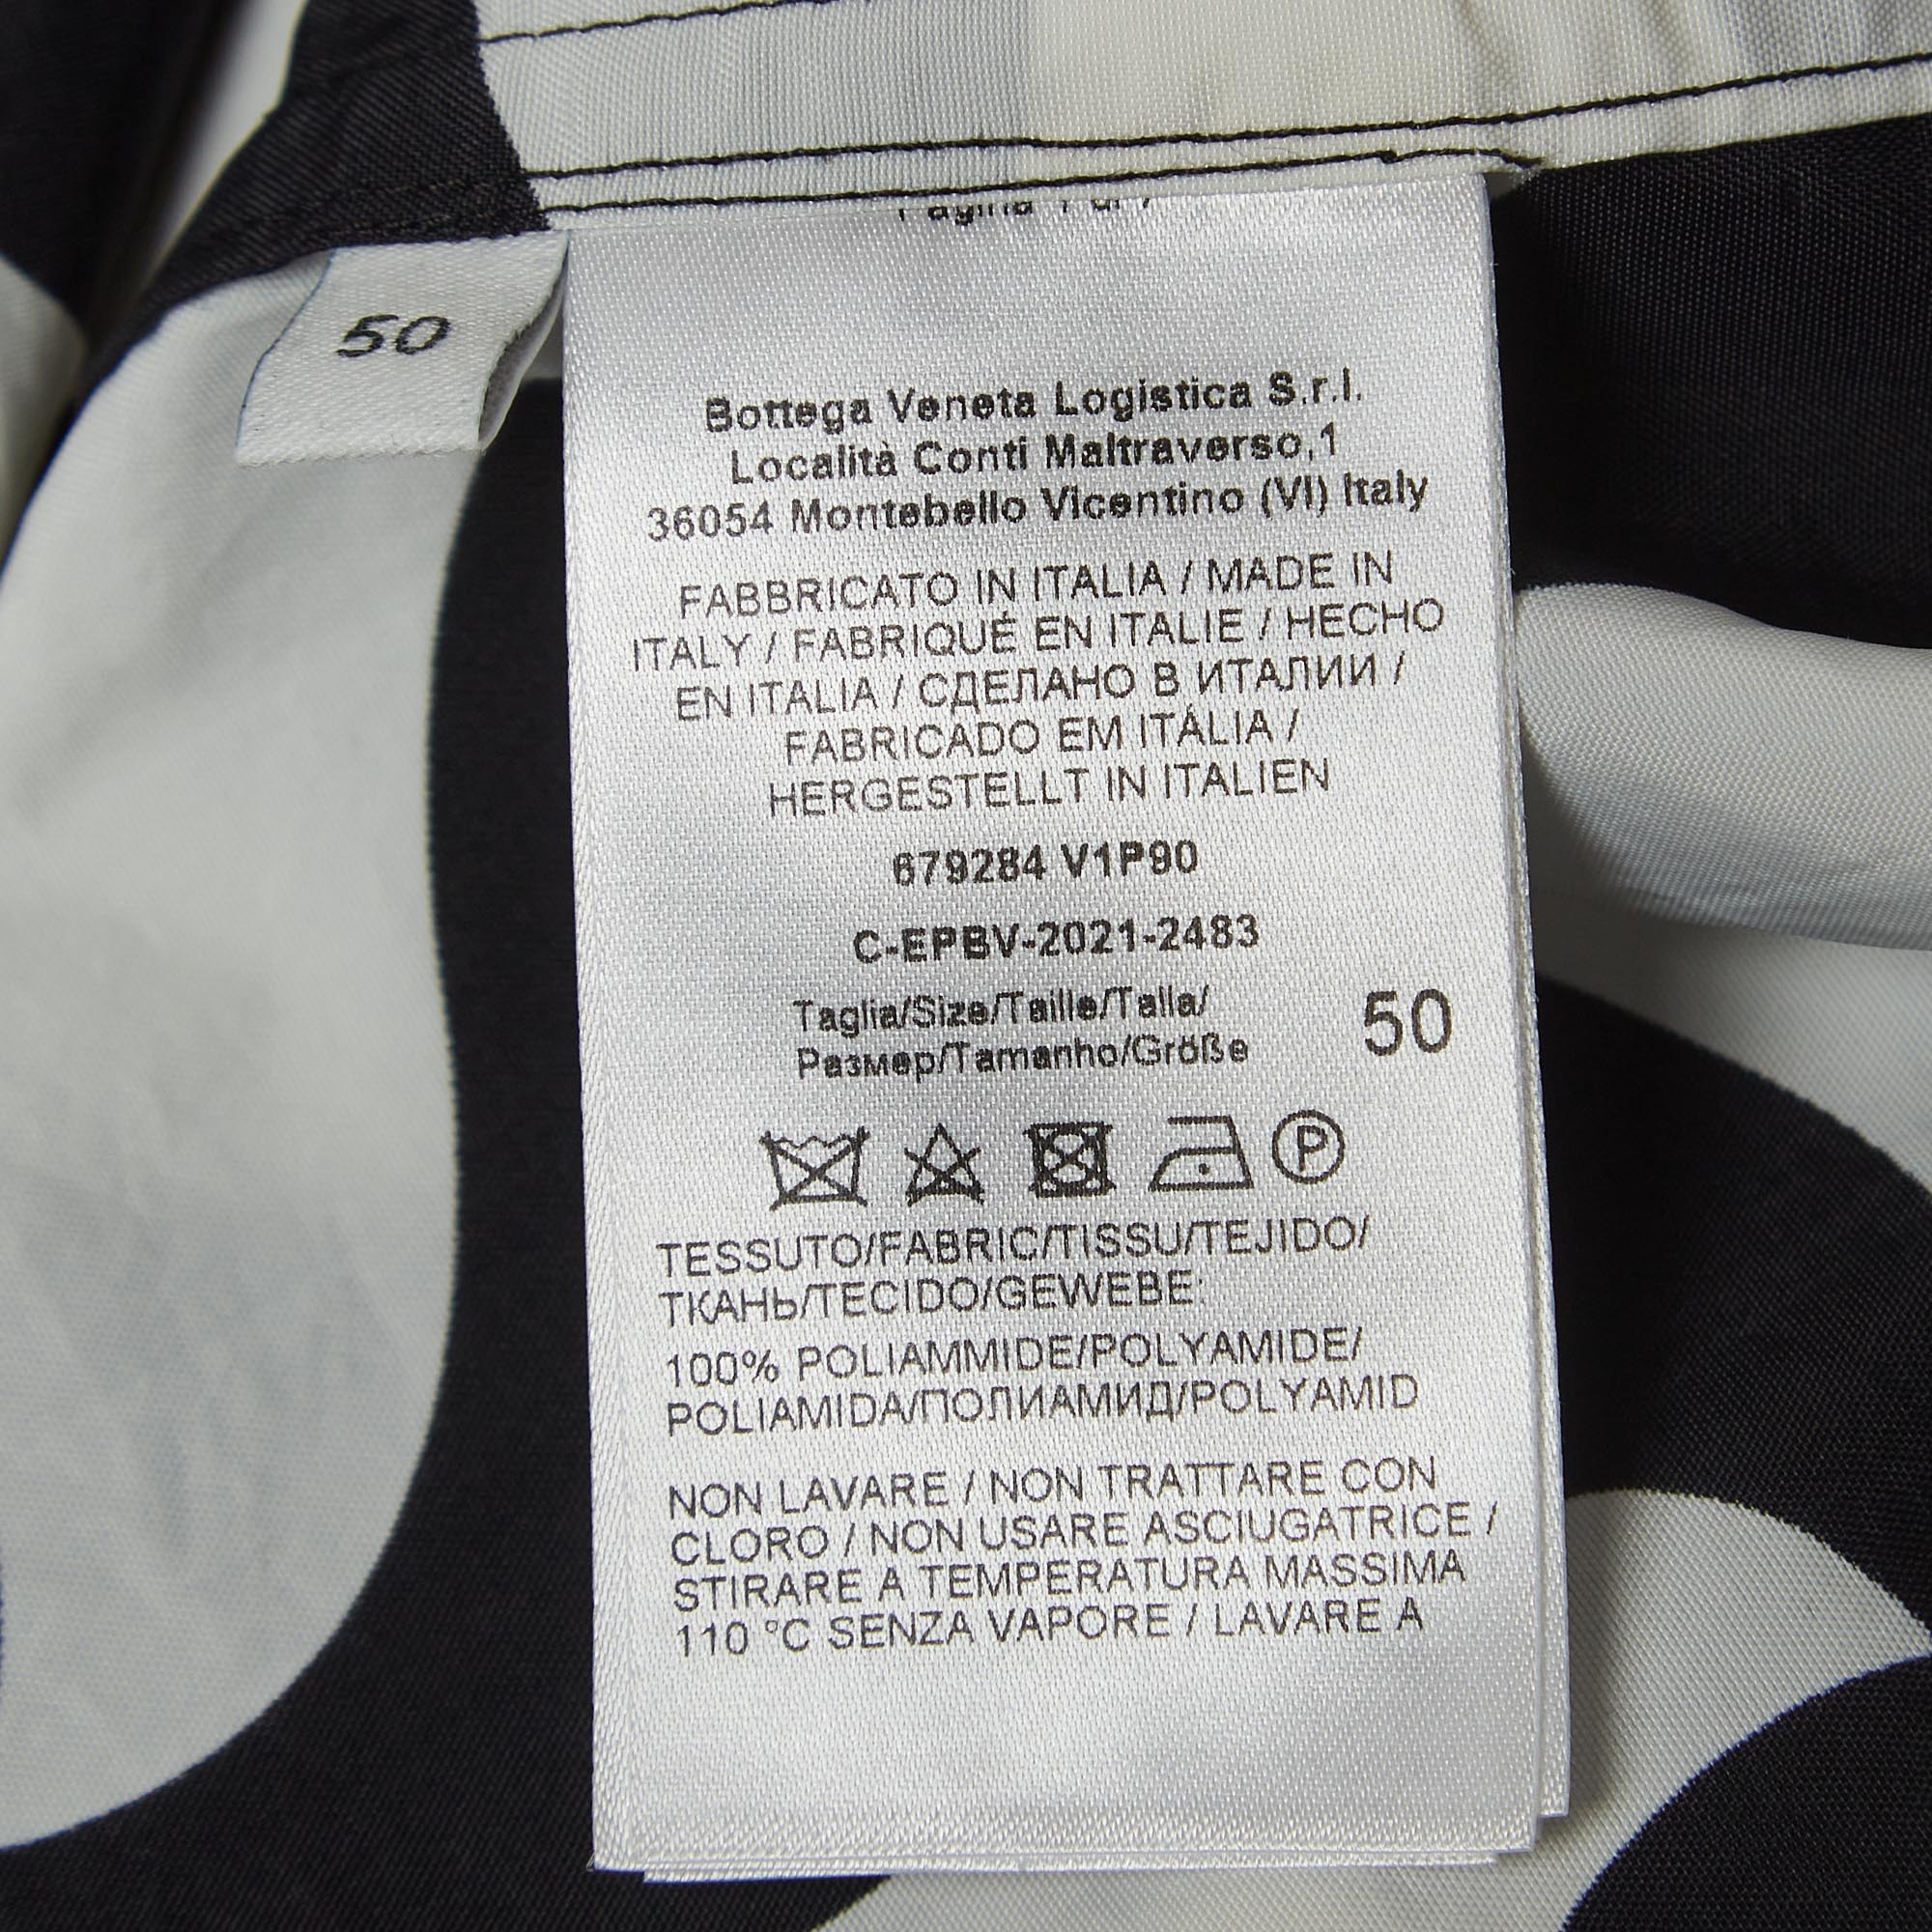 Bottega Veneta Black/White Printed Nylon Bowling Shirt L